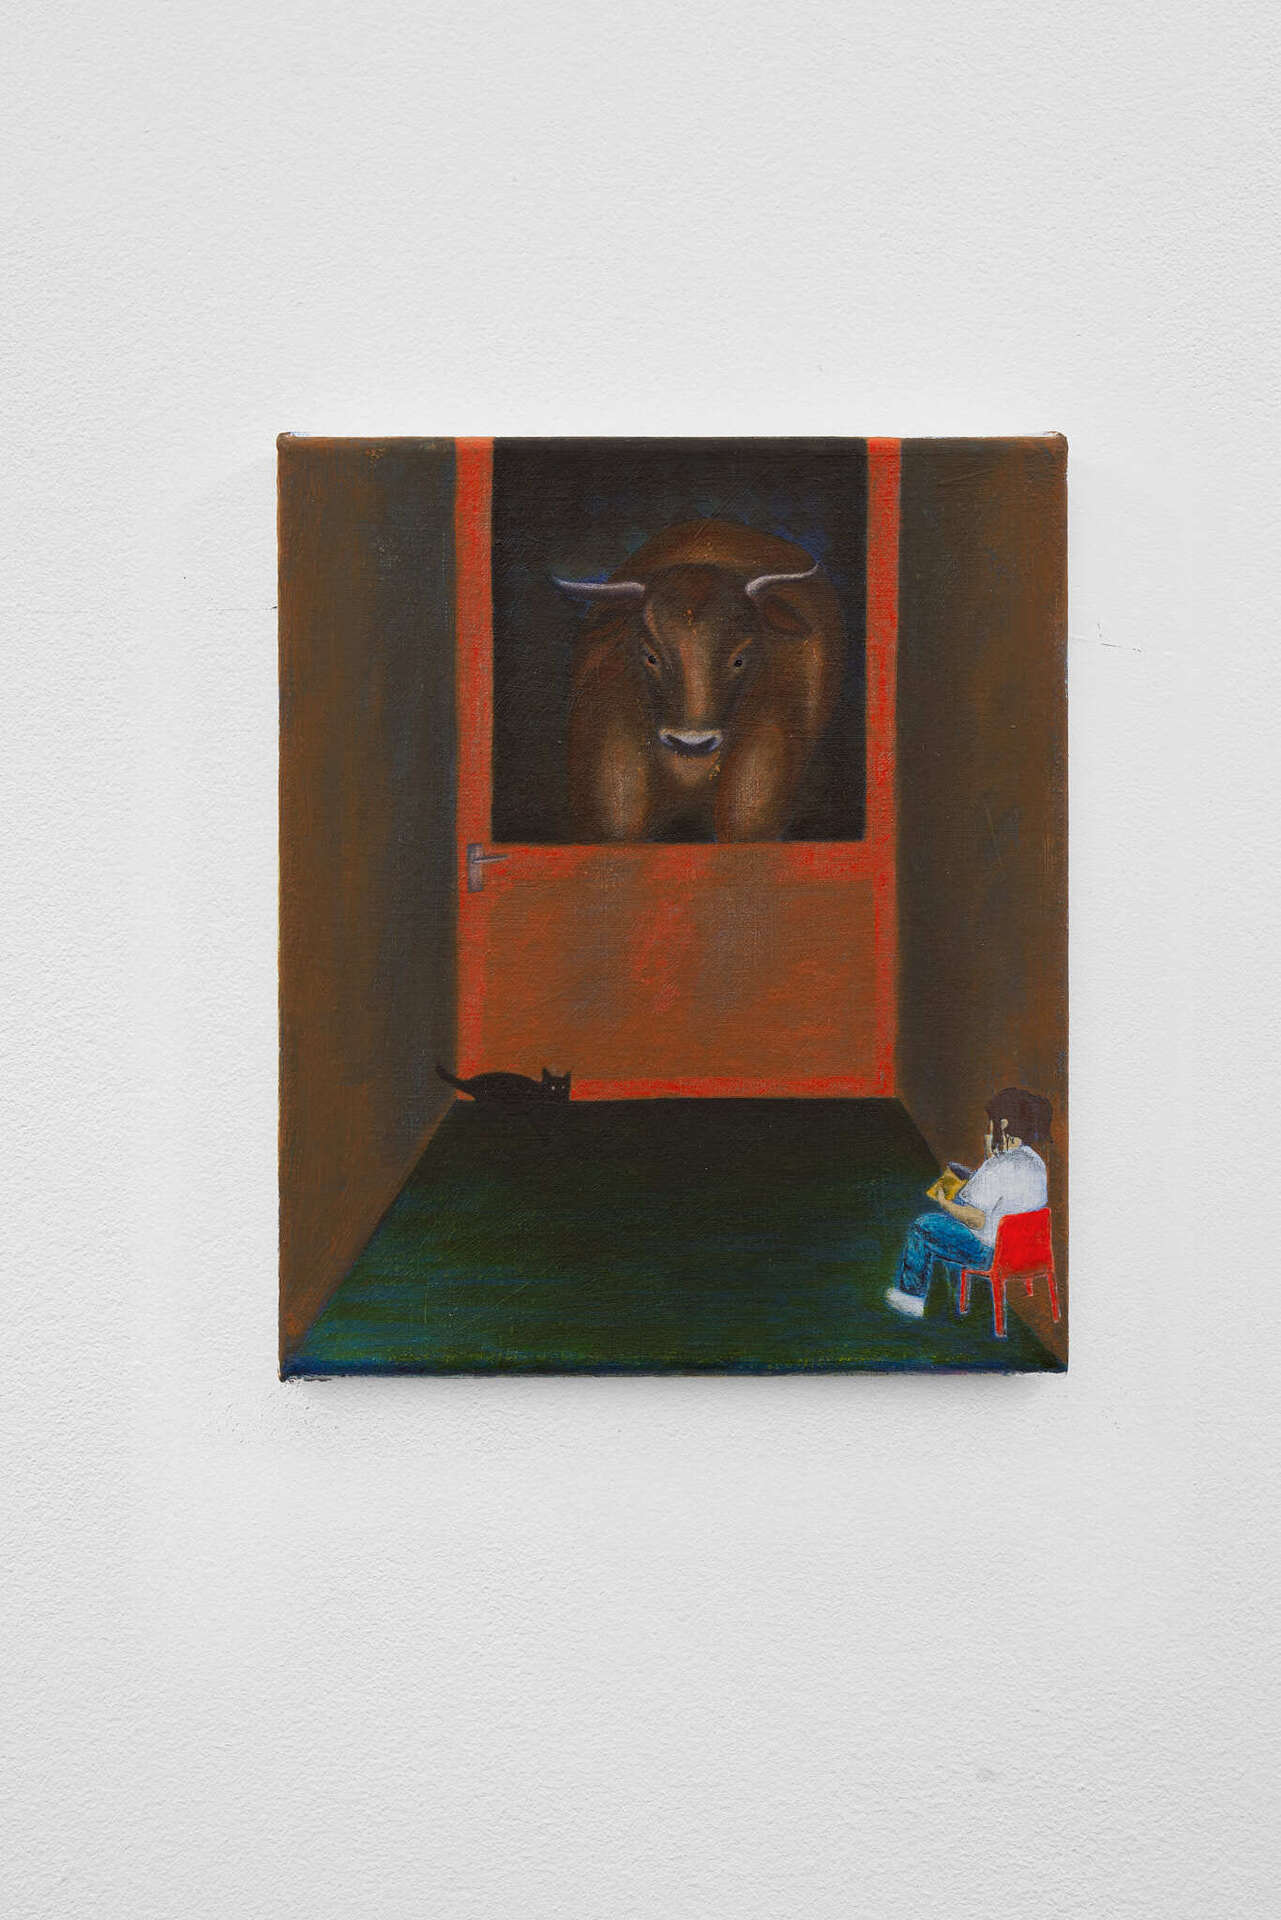 Aisha Christison, Pony at the gate, 2020, oil on linen, 26 x 22 cm